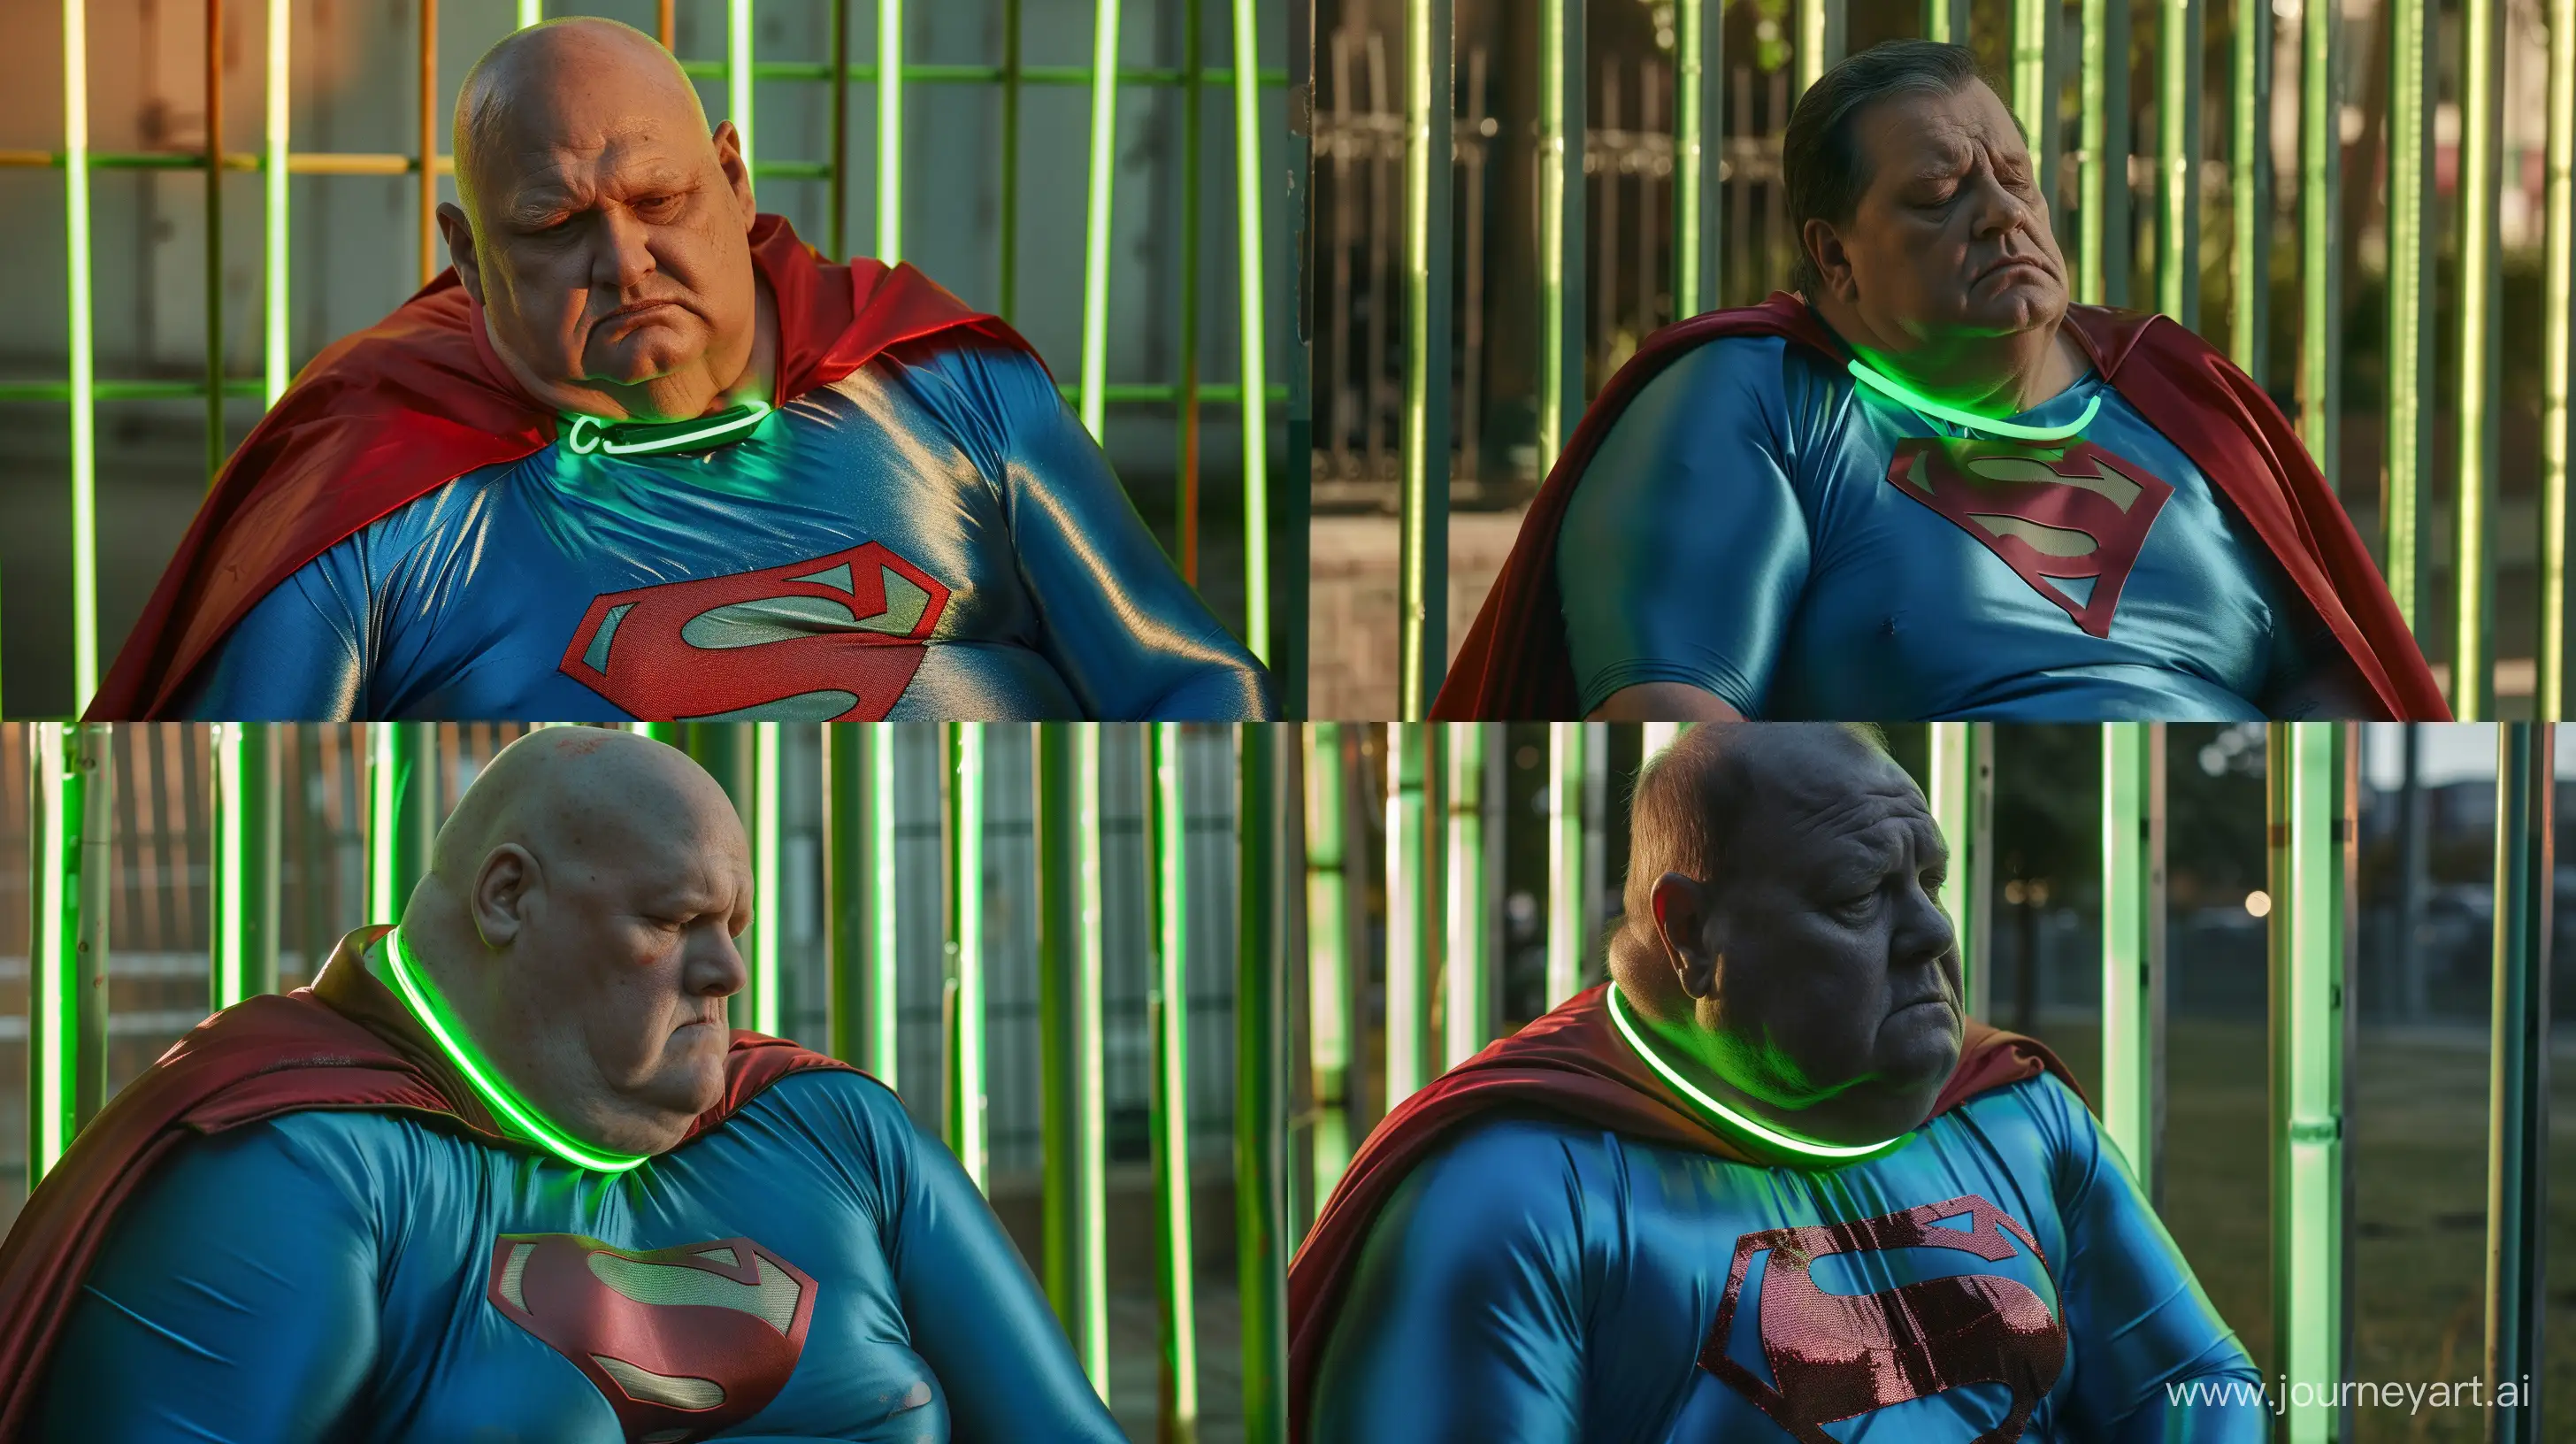 Elderly-Superman-Relaxing-Outdoors-Amid-Neon-Lights